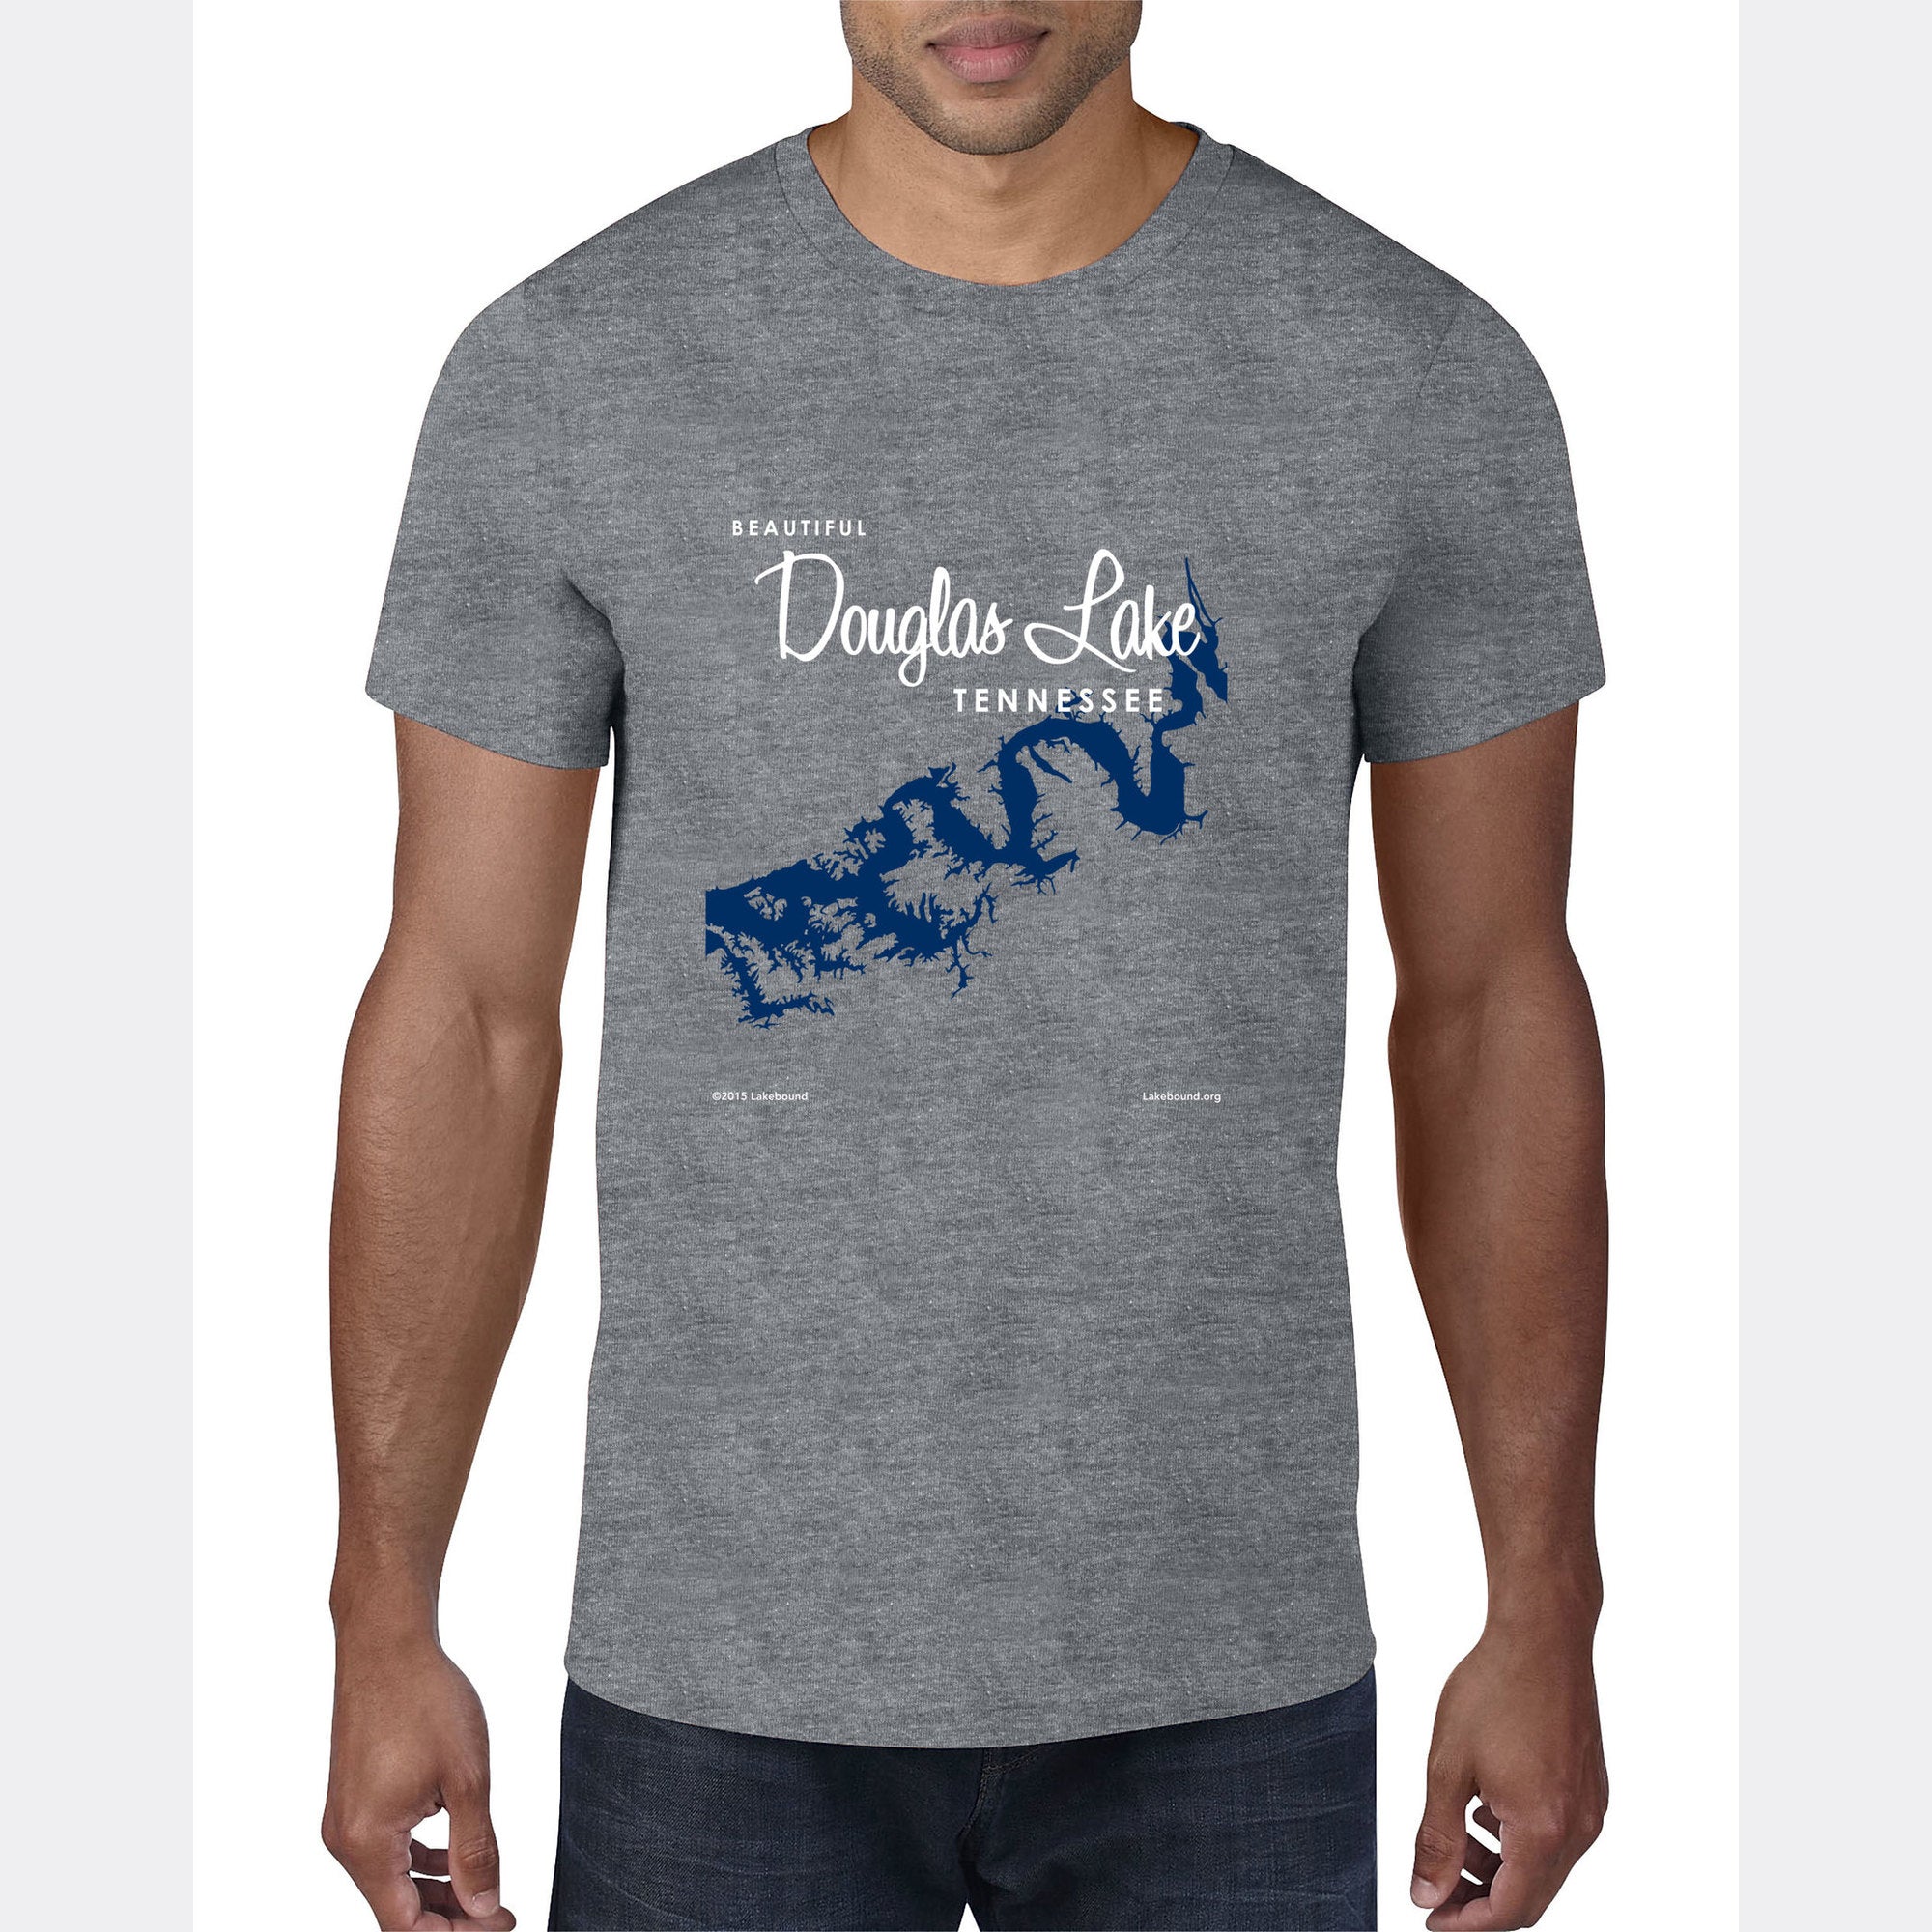 Douglas Lake Tennessee, T-Shirt